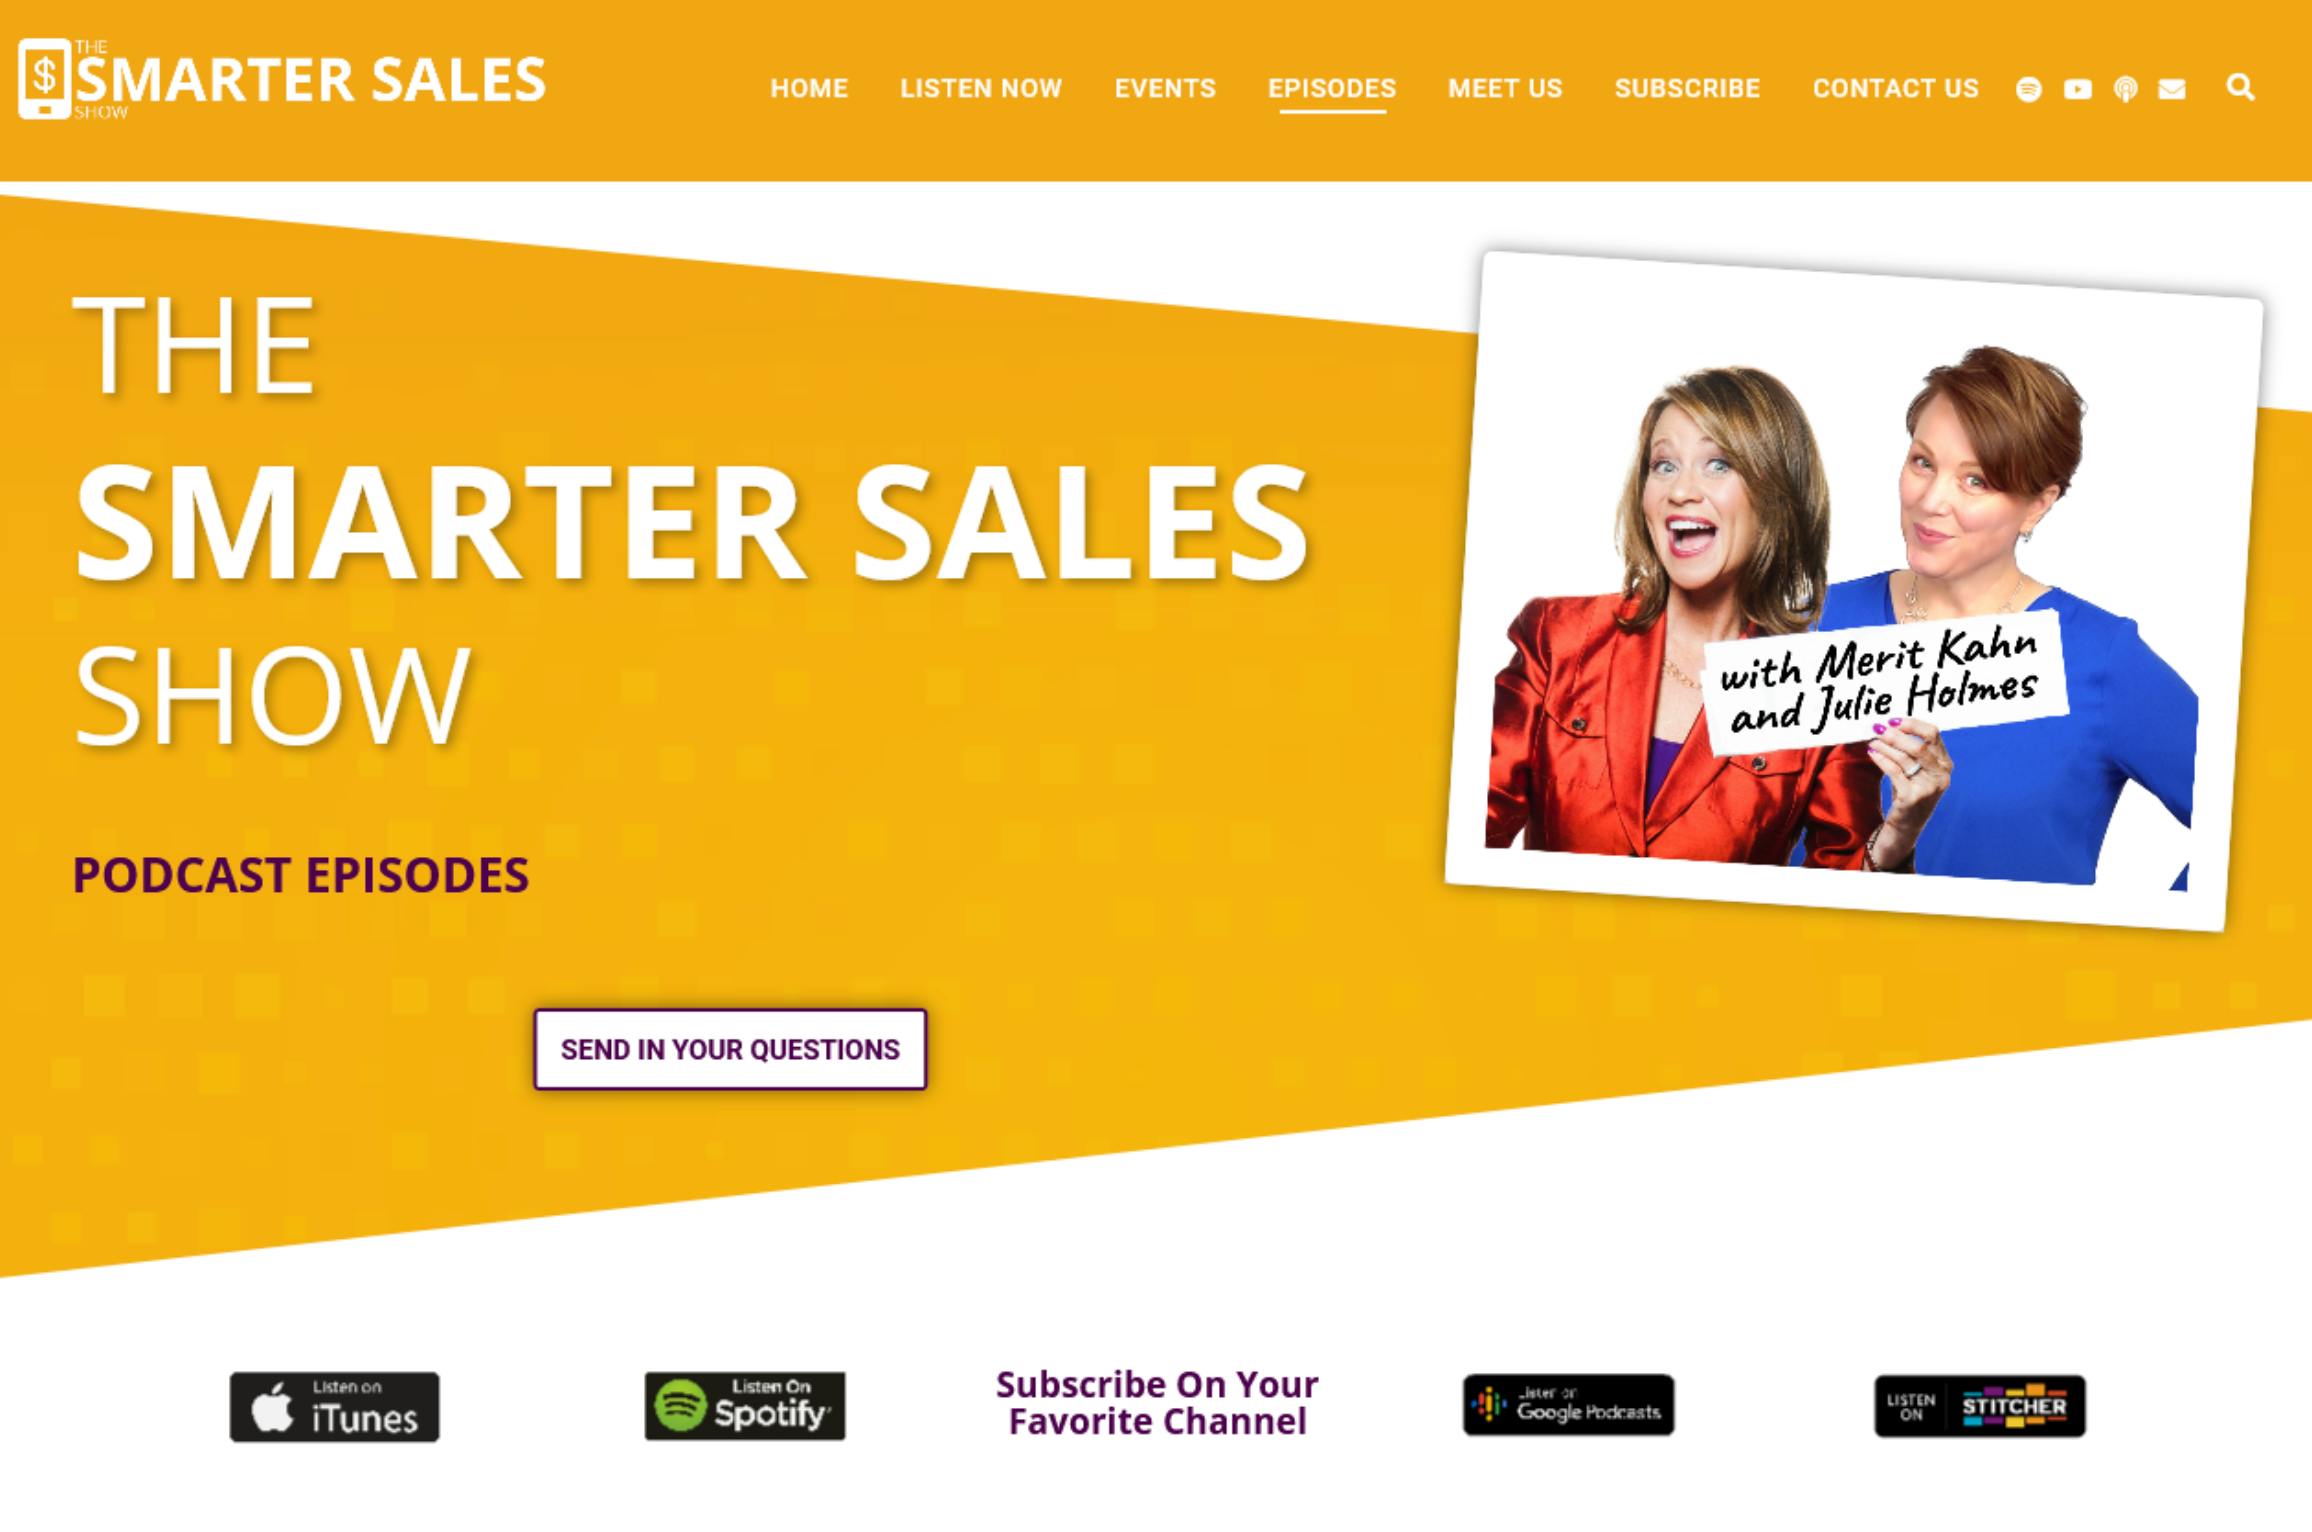 The Smarter Sales Show podcast website